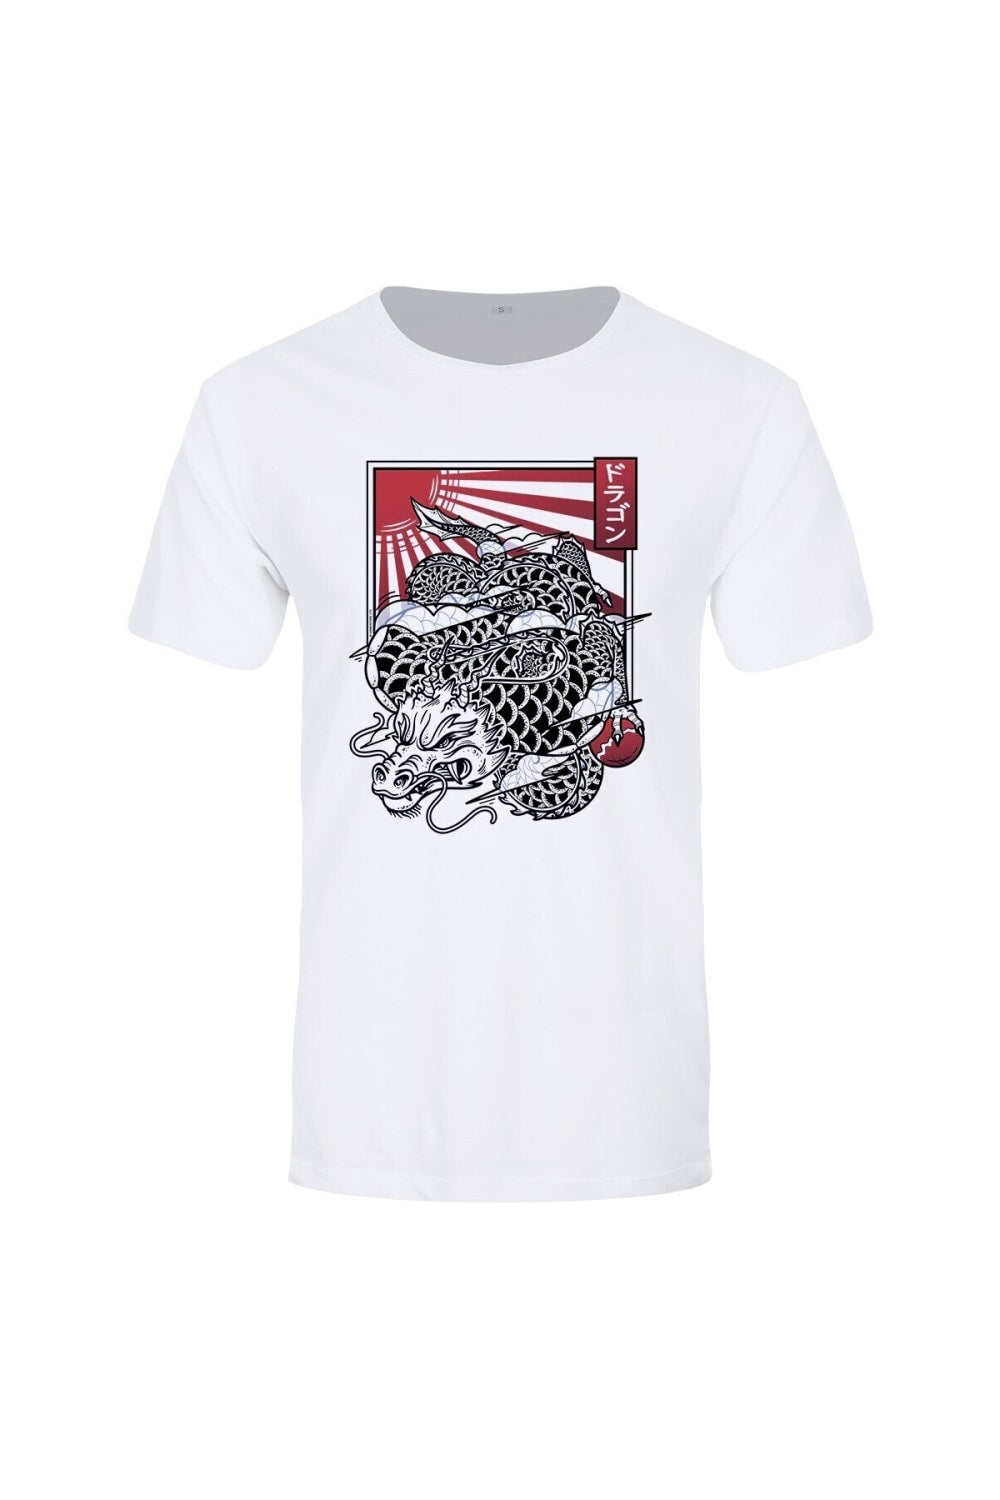 Unorthodox Collective Mens Ryu T-Shirt (White/Red/Black)